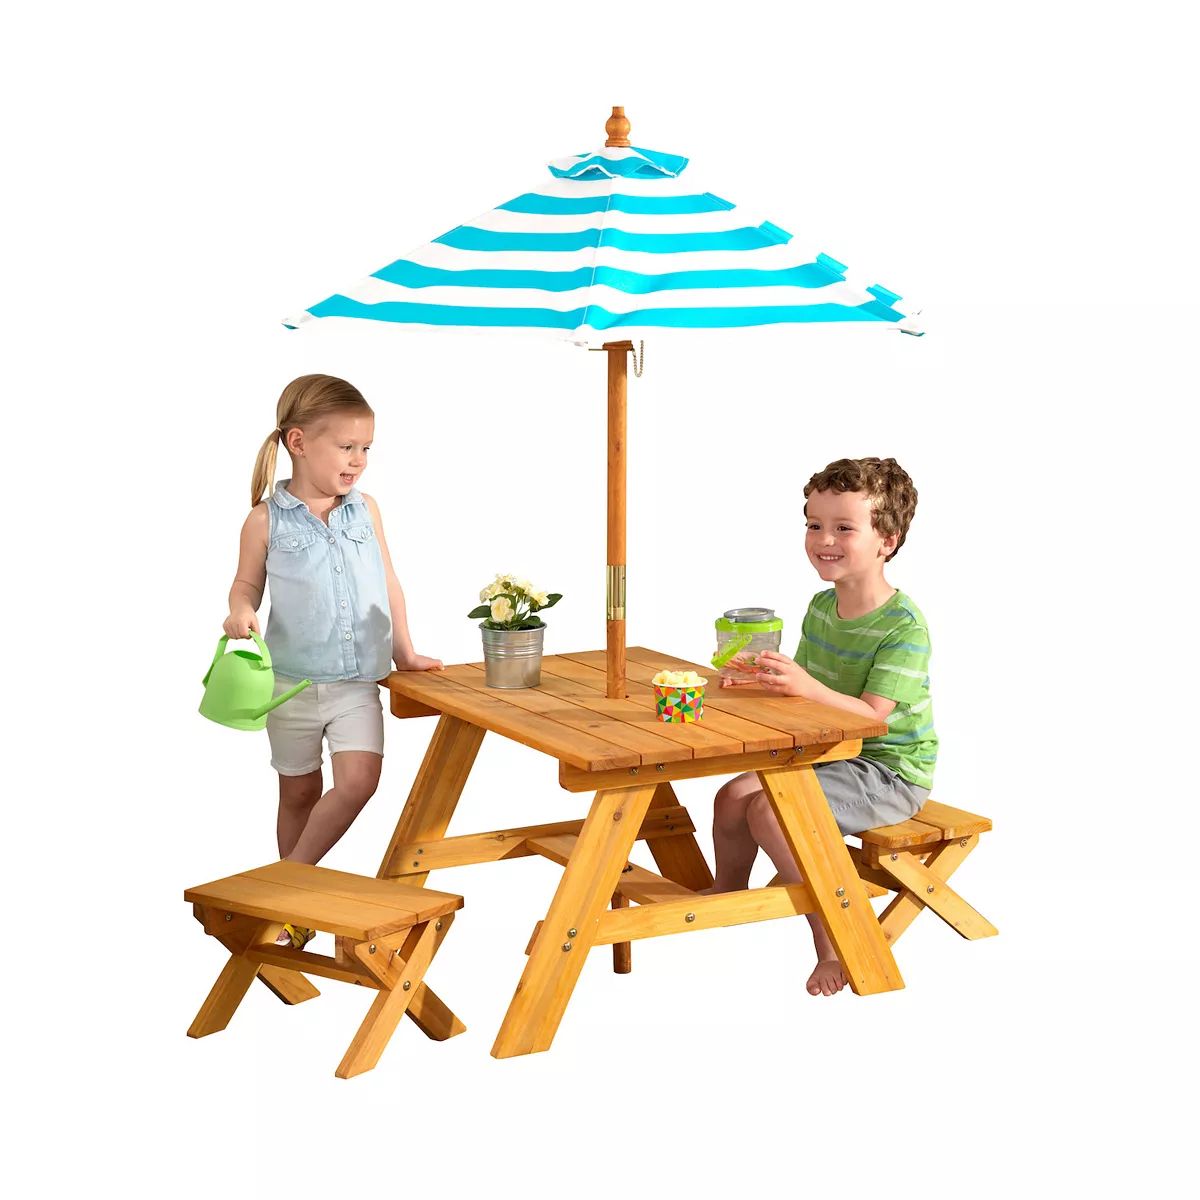 KidKraft Outdoor Table & Bench Set with Umbrella - Turquoise & White | Kohl's